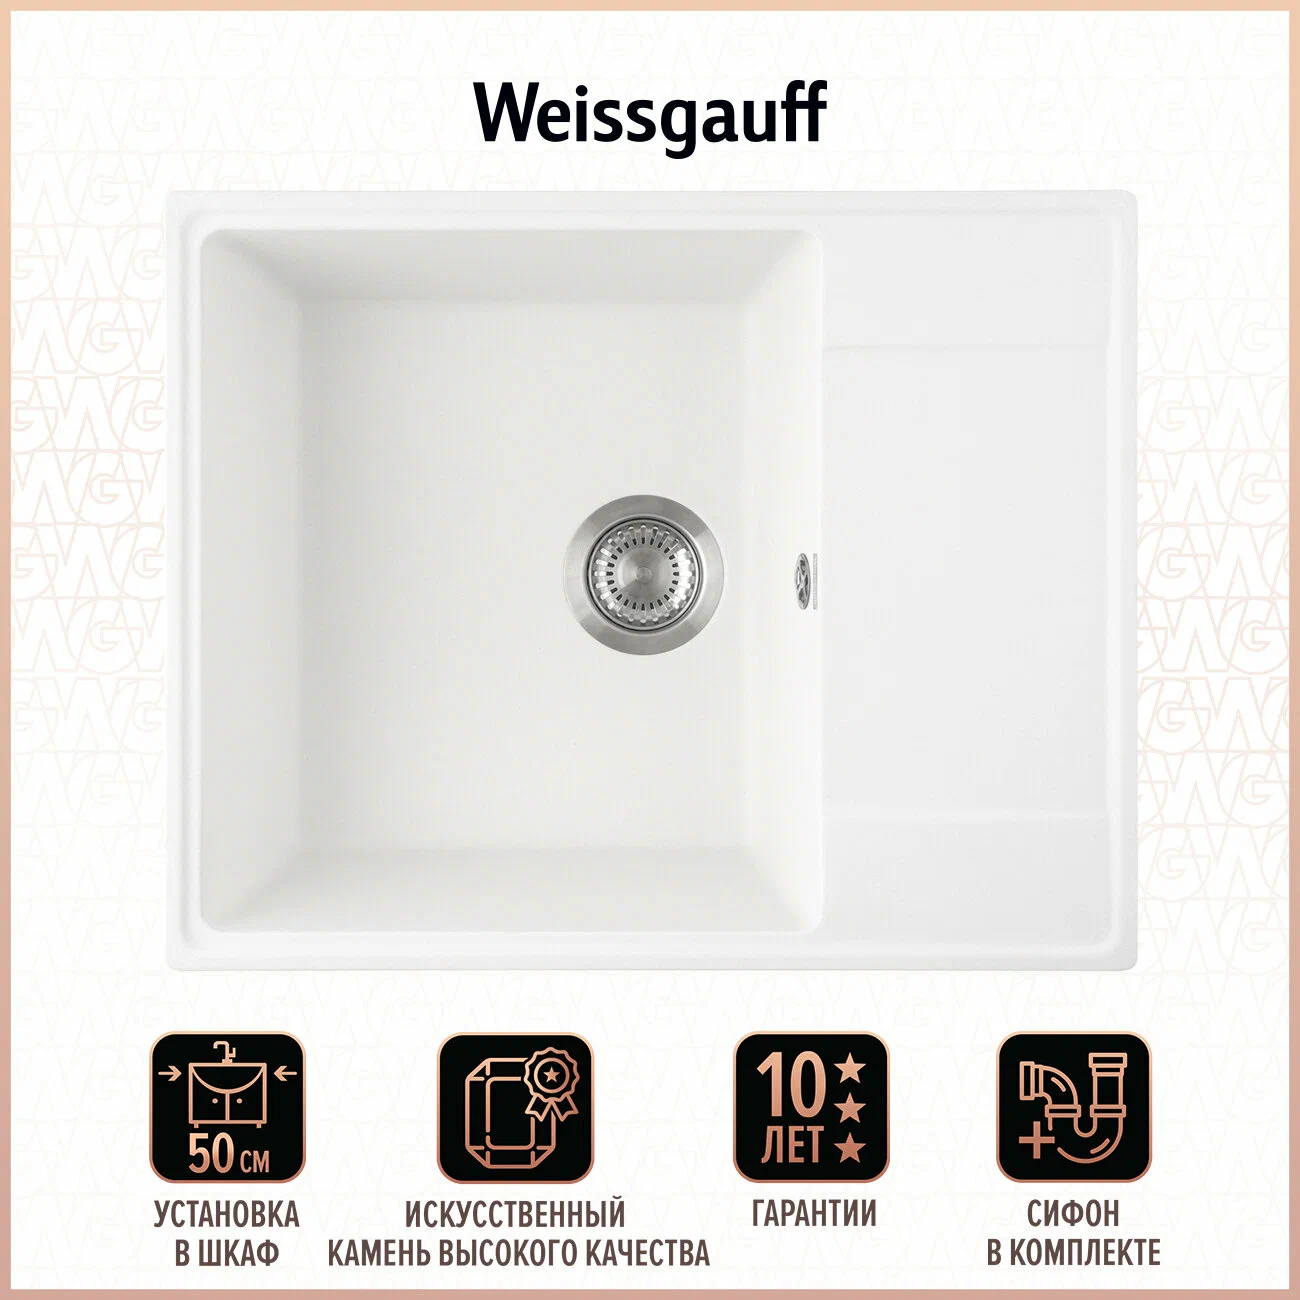 Мойка Weissgauff WG 65001 White